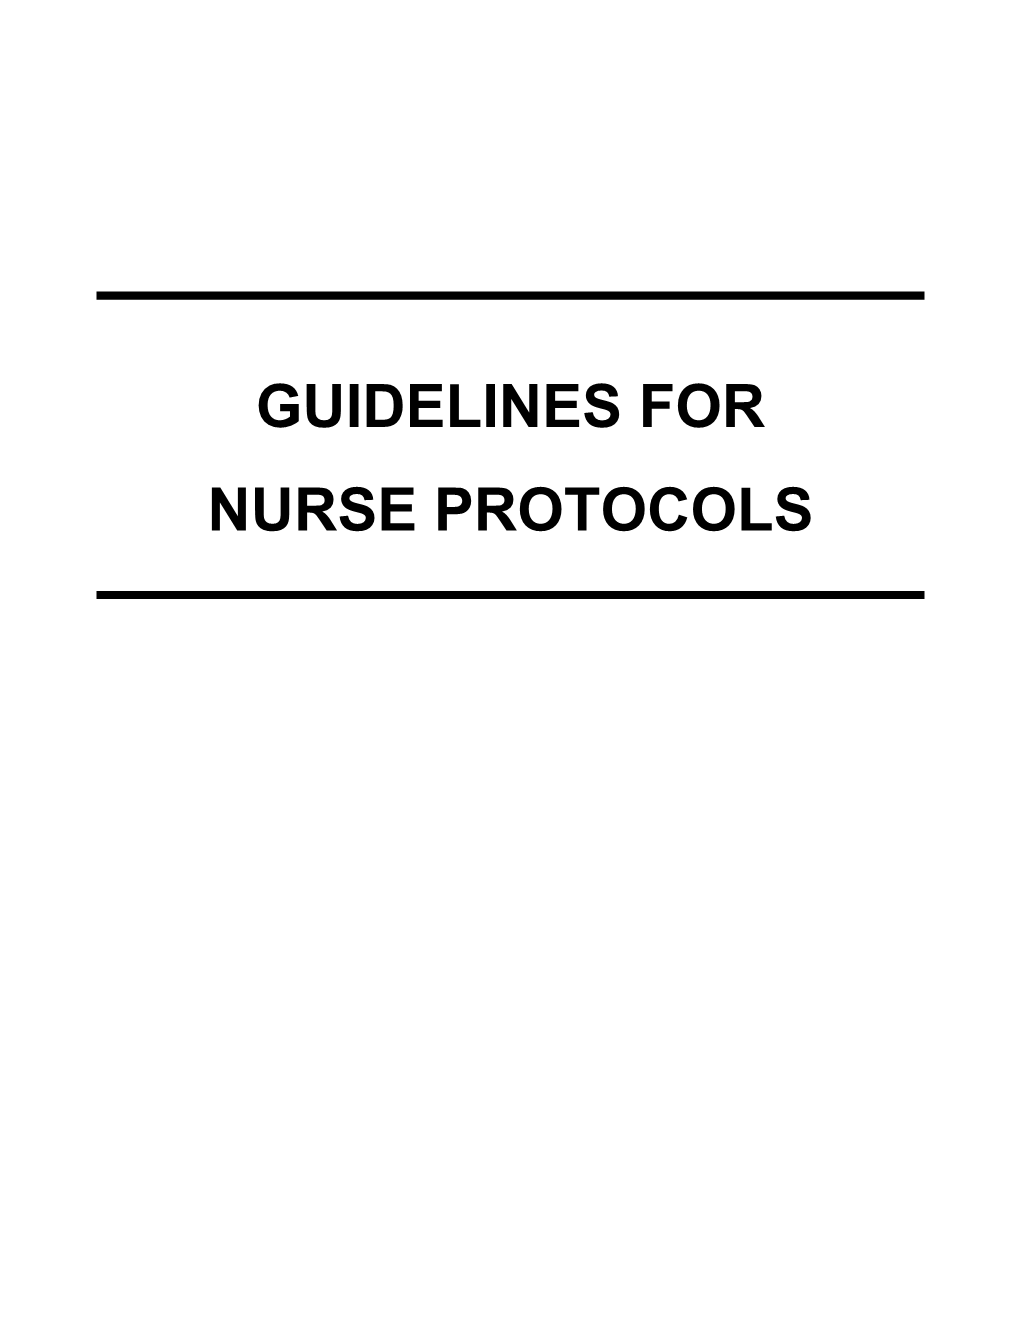 Nurse Protocols for Registered Professional Nurses